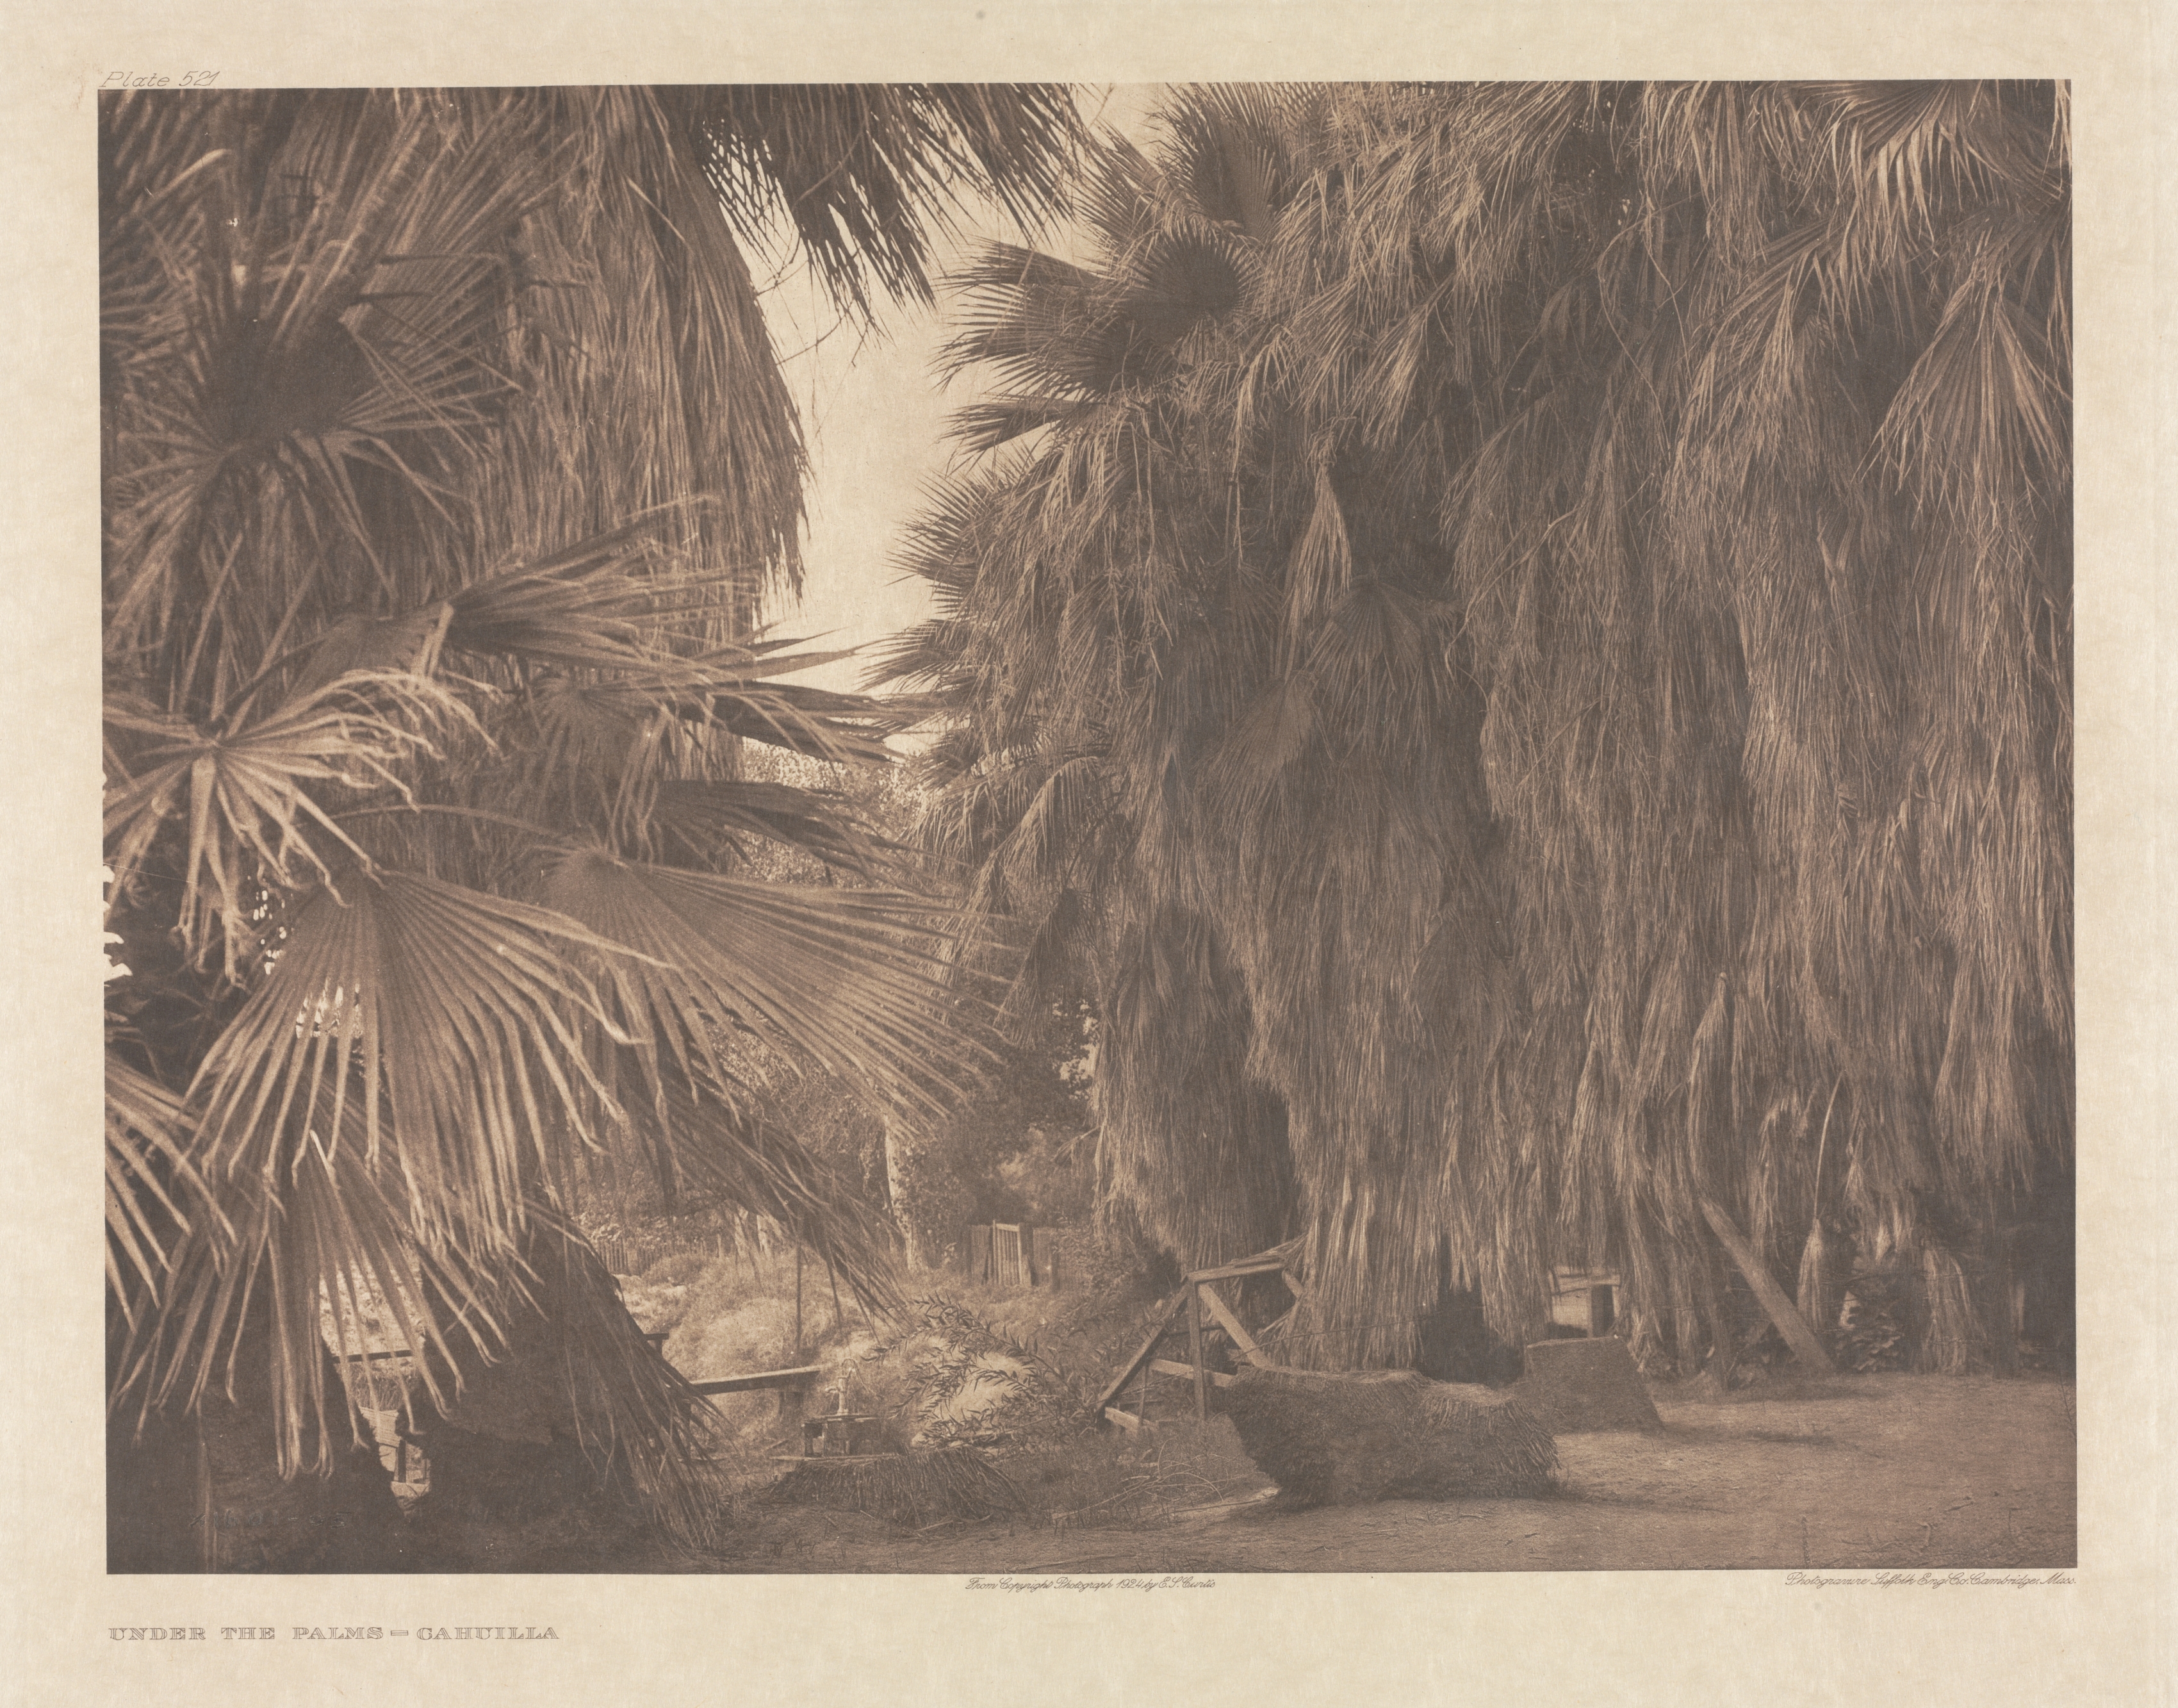 Portfolio XV, Plate 521: Under the Palms - Cahuilla